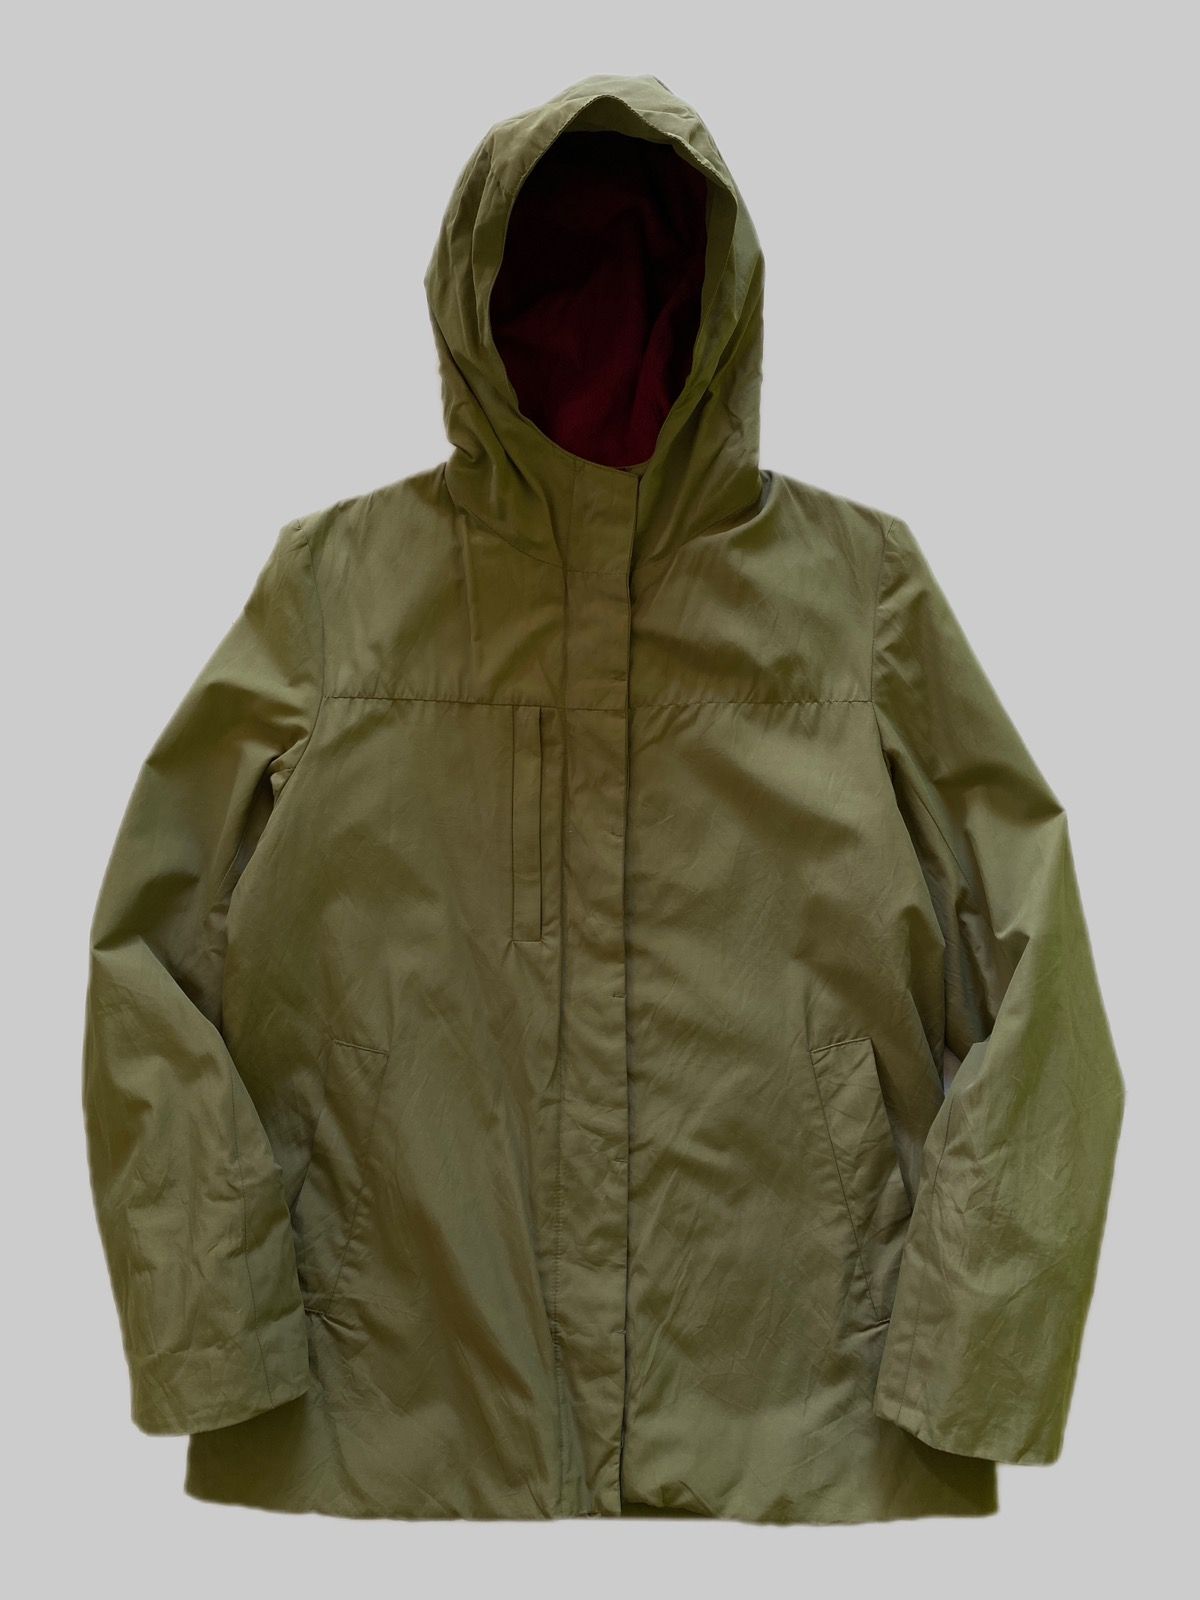 Issey Miyake AW1991 Fleece-Lined Hooded Jacket | Grailed